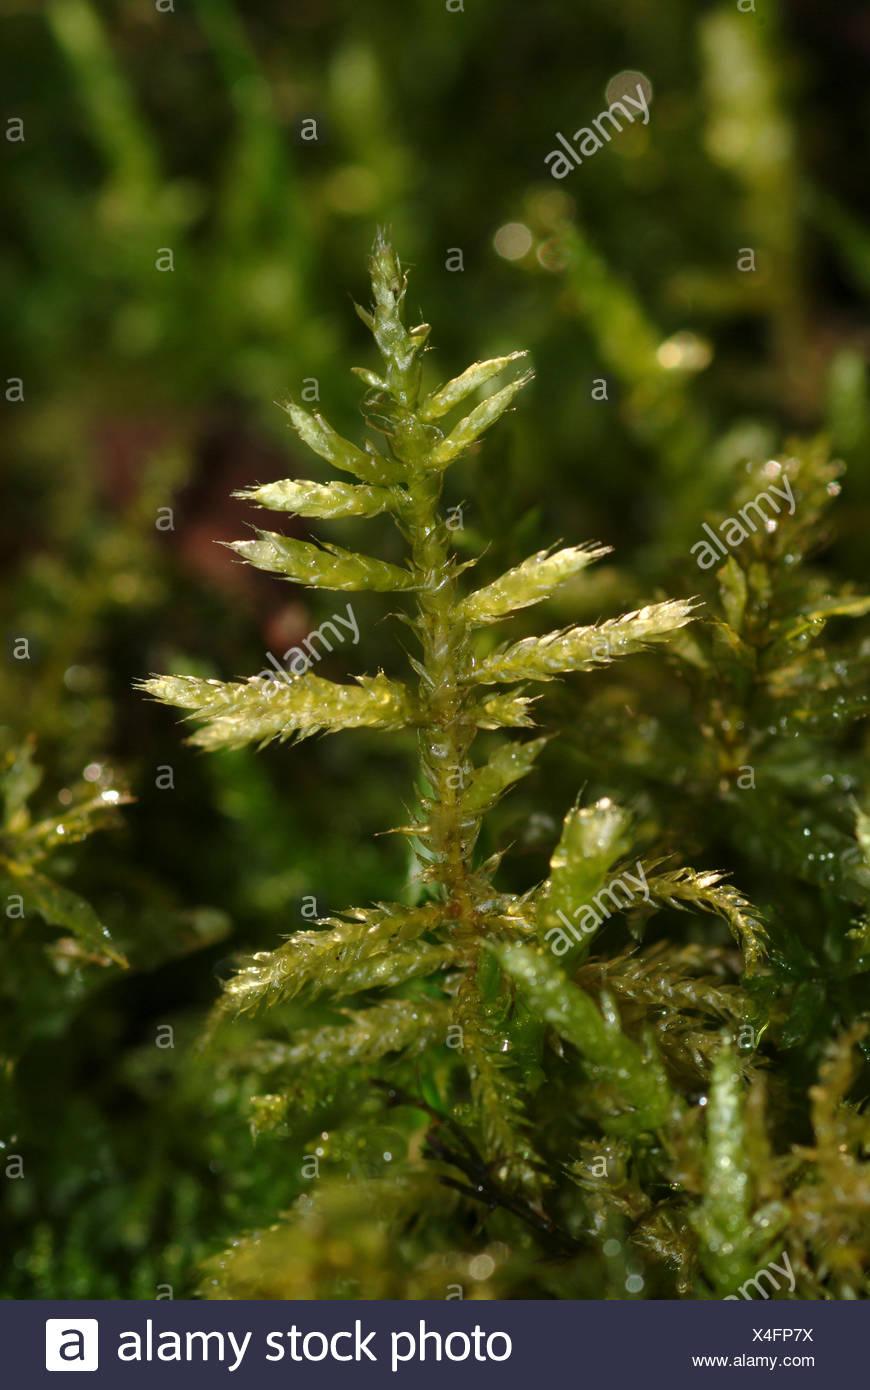 cirriphyllum-moss-cirriphyllum-piliferum-twiglet-germany-bgda-X4FP7X.jpg